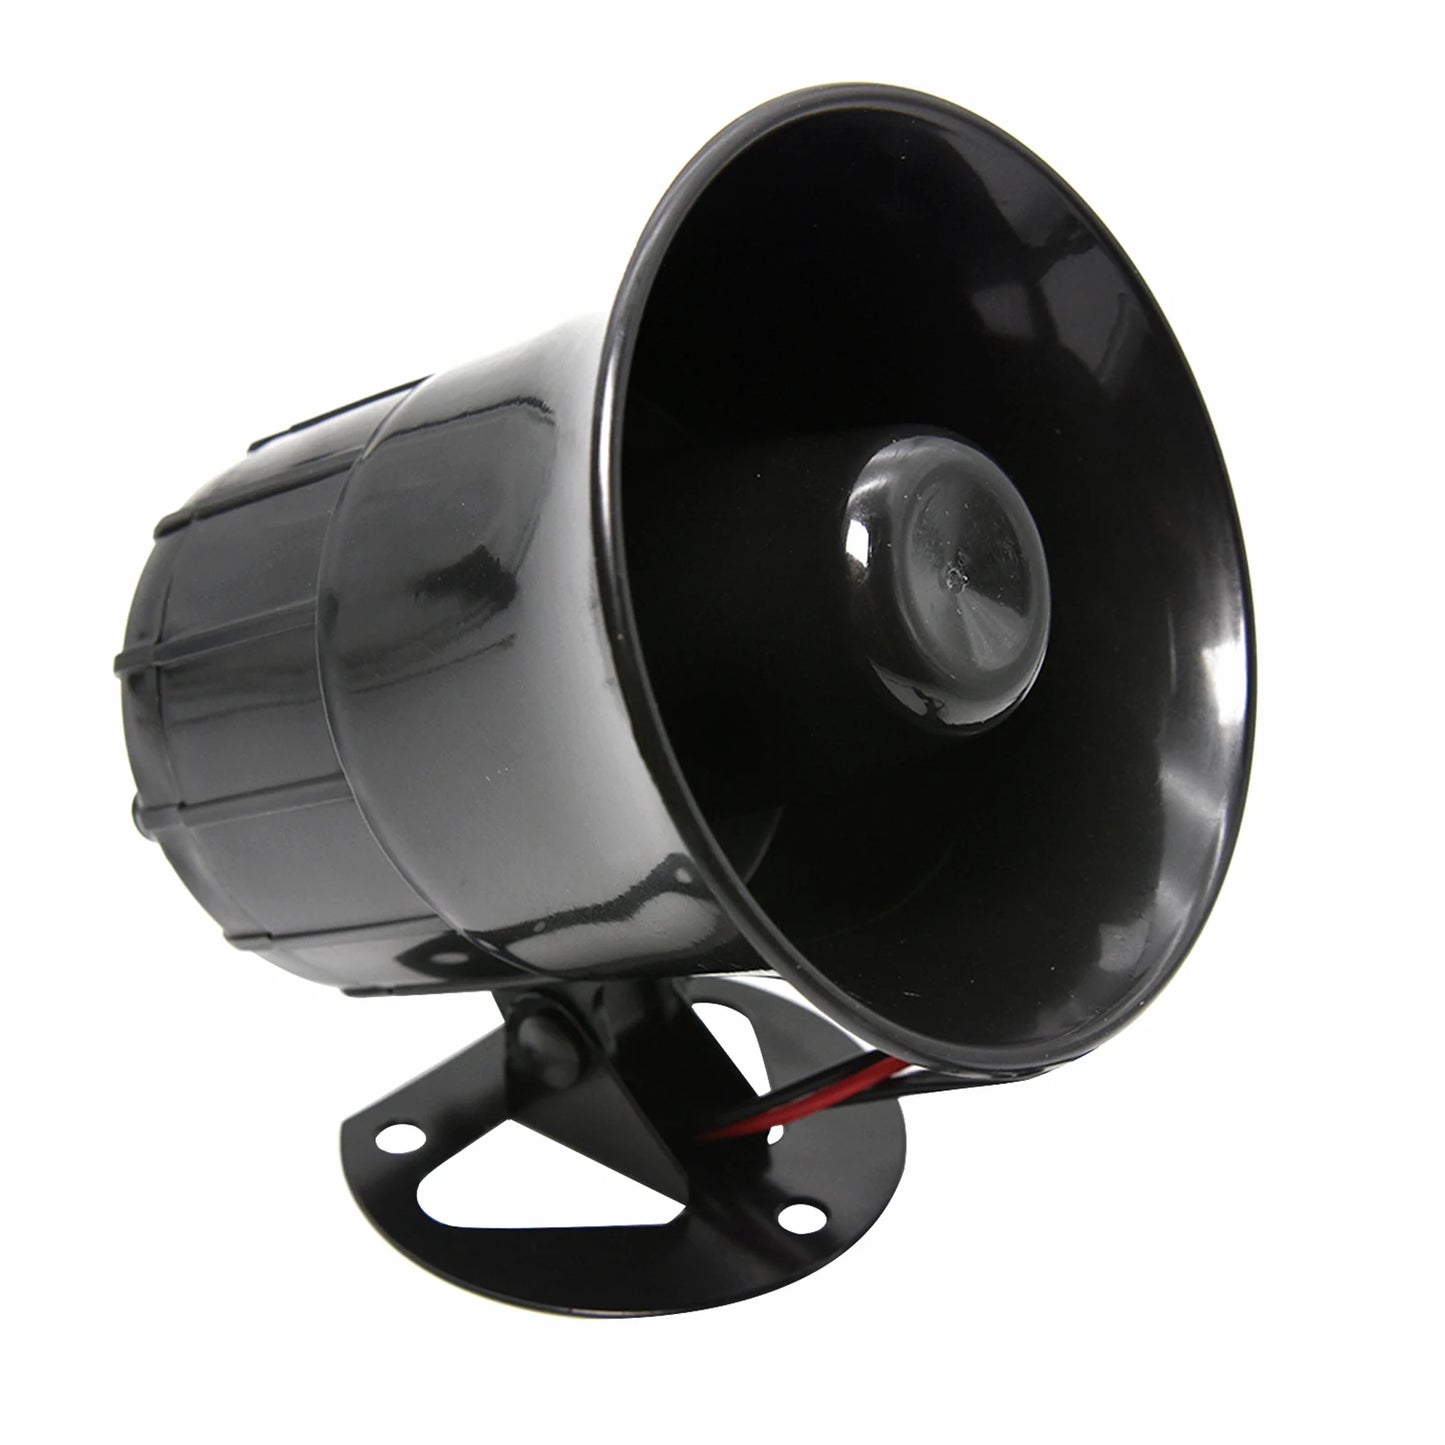 3 Tone Loud Car Horn Air Horn: 12V Loud Speaker for Car, Motorcycle - Police Fire Siren Horn, 115dB Sound